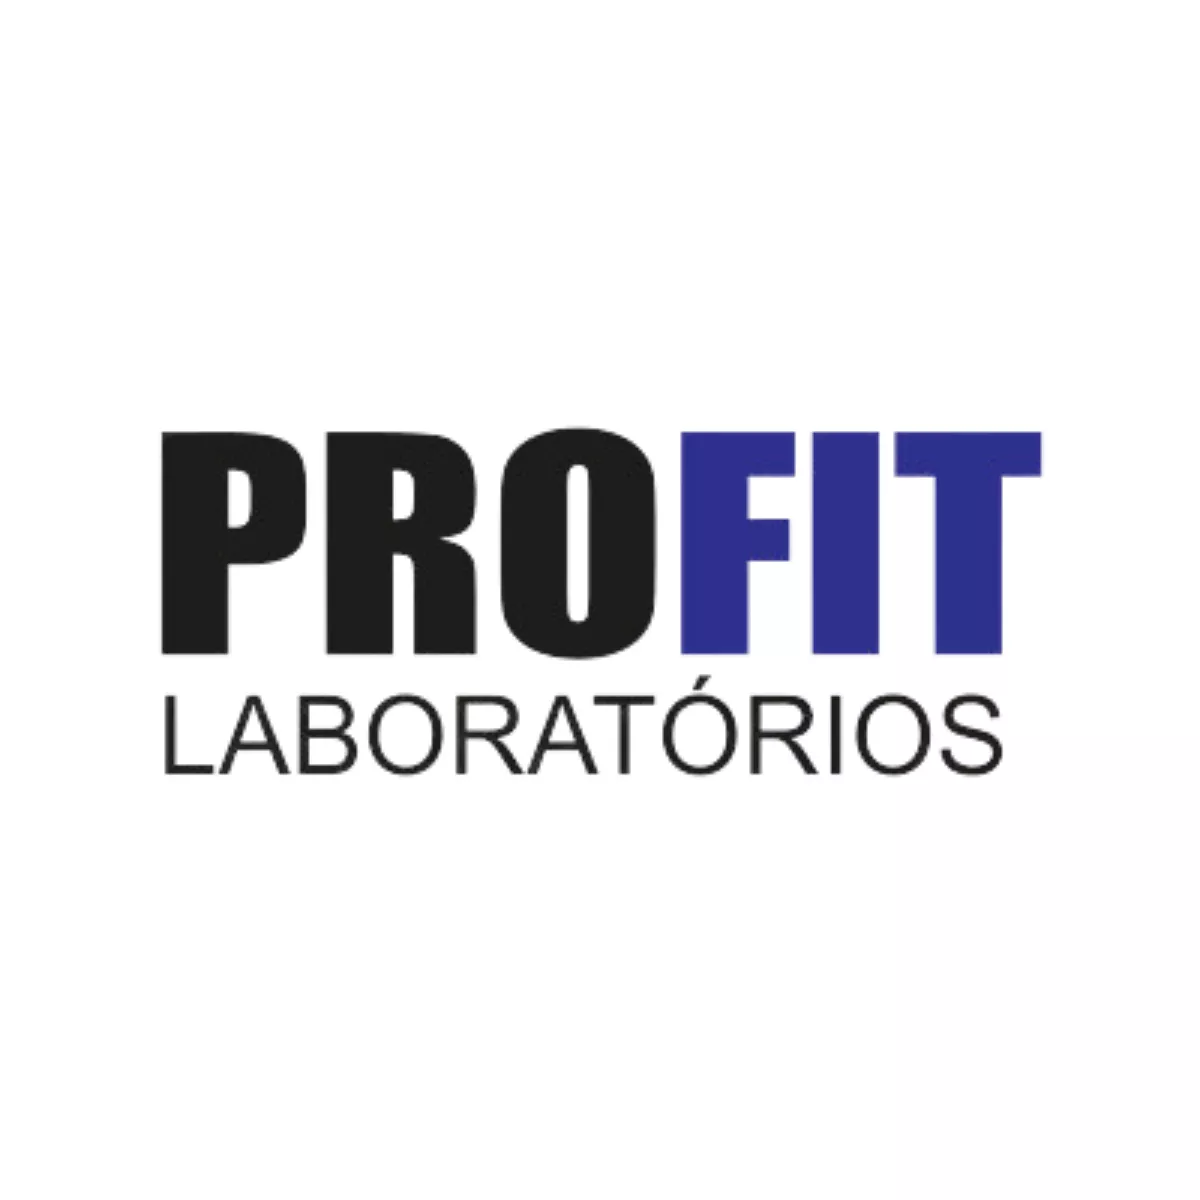 Profit Labs